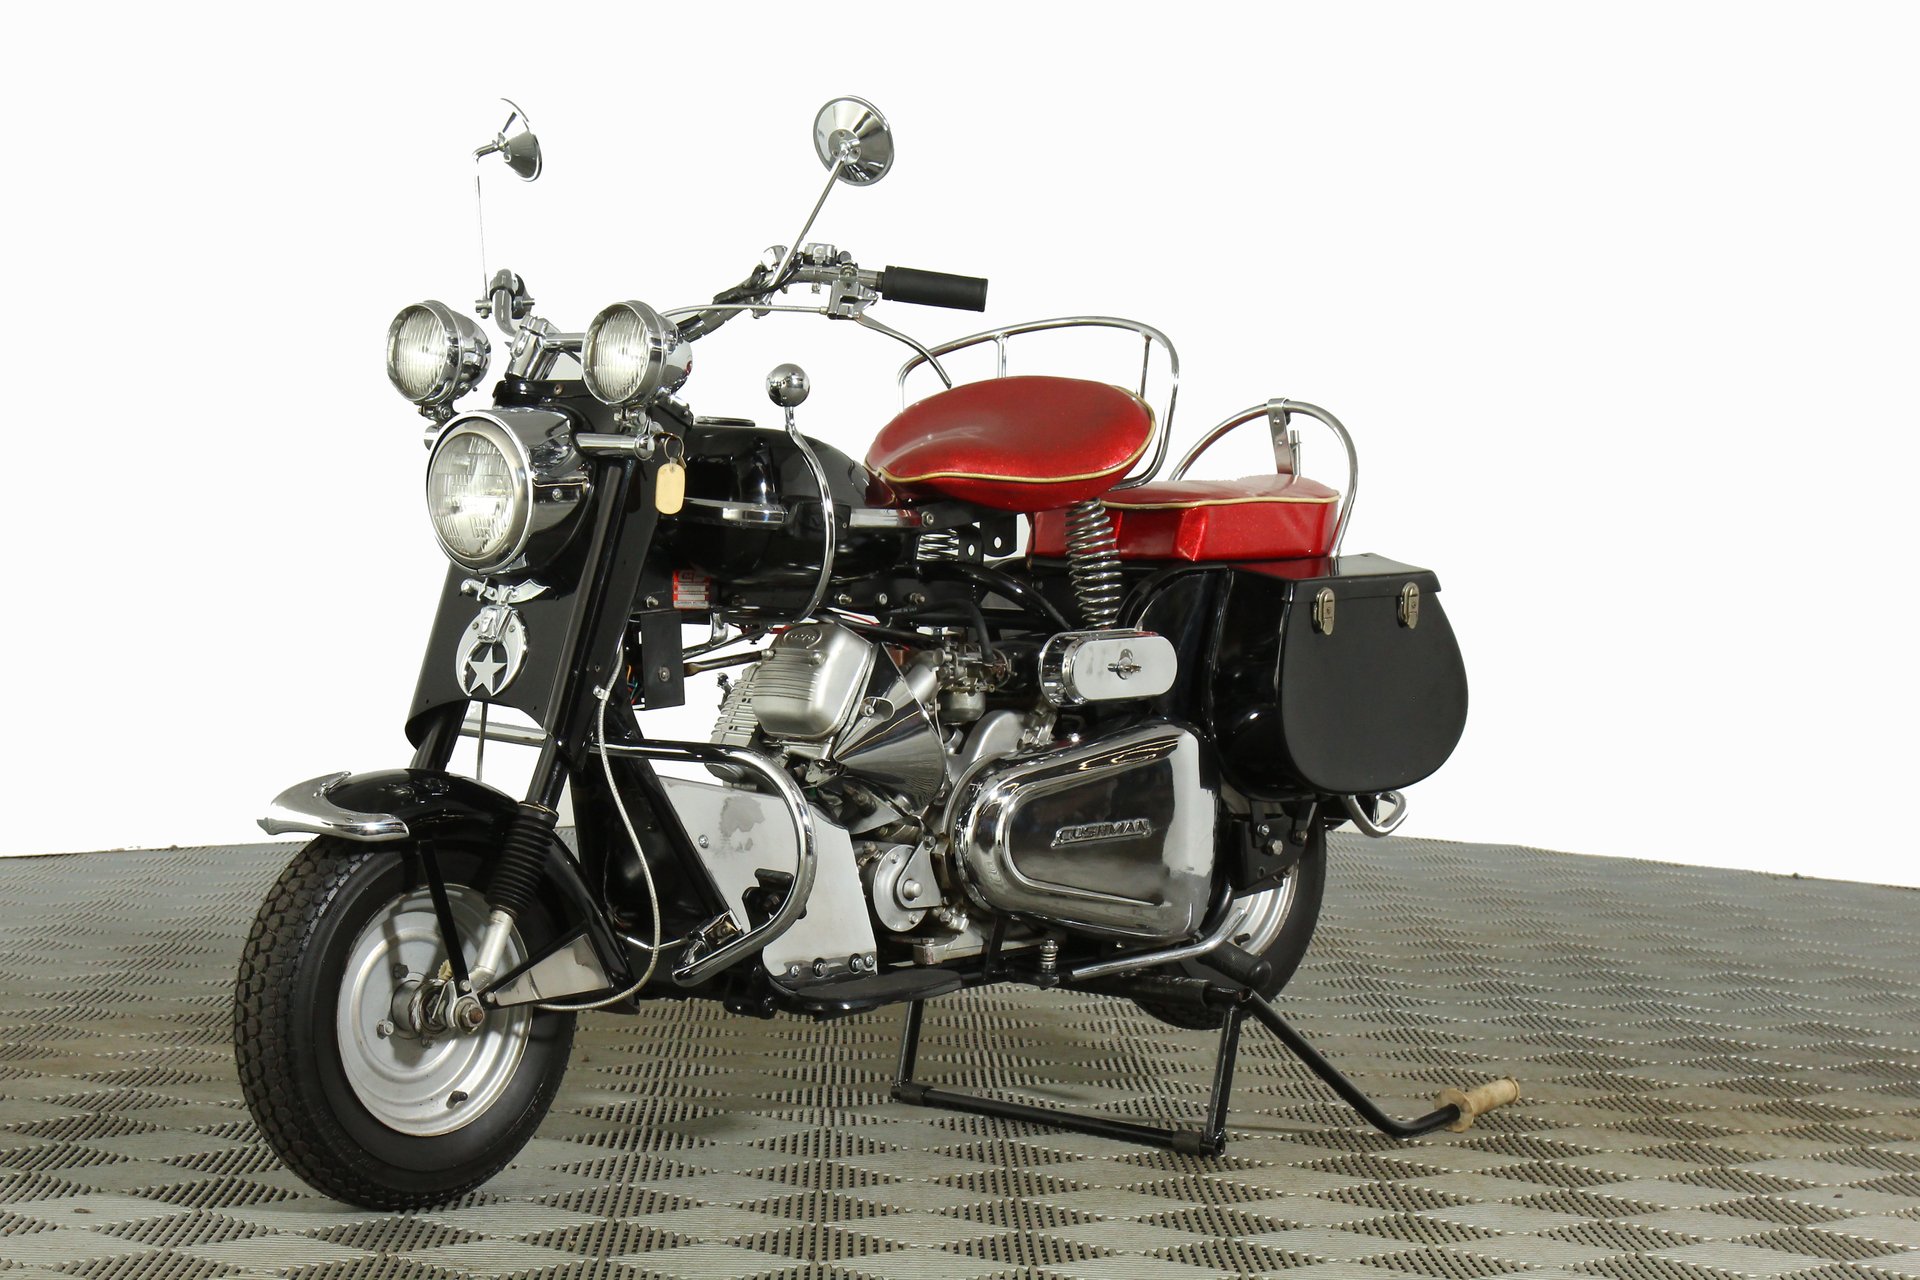 1964 cushman scooter